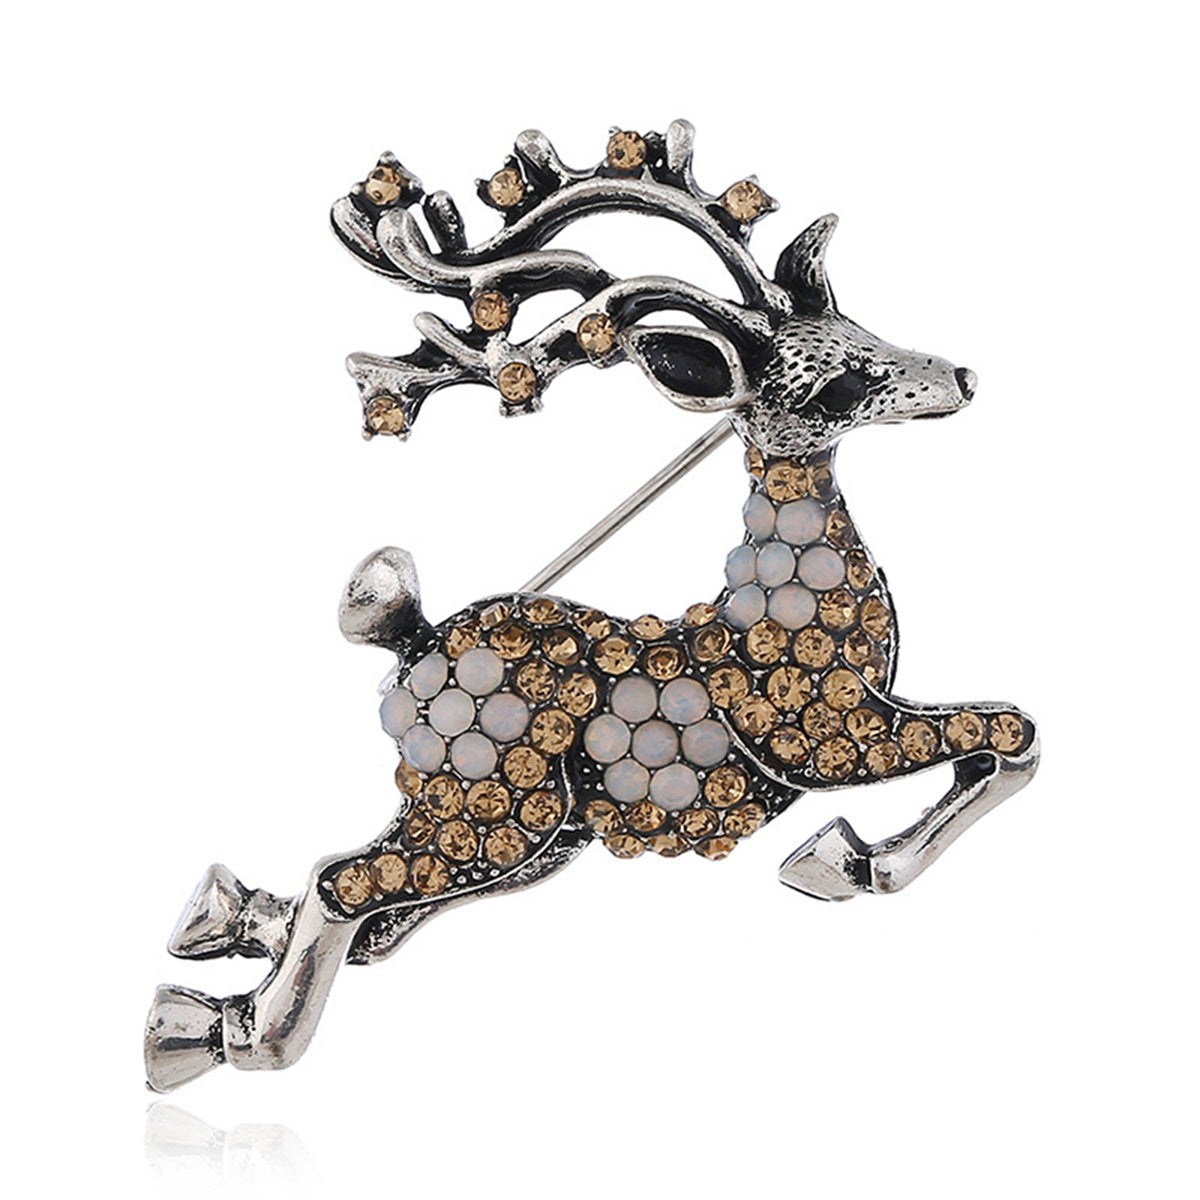 Cubic Zirconia & Silver-Plated Reindeer Brooch